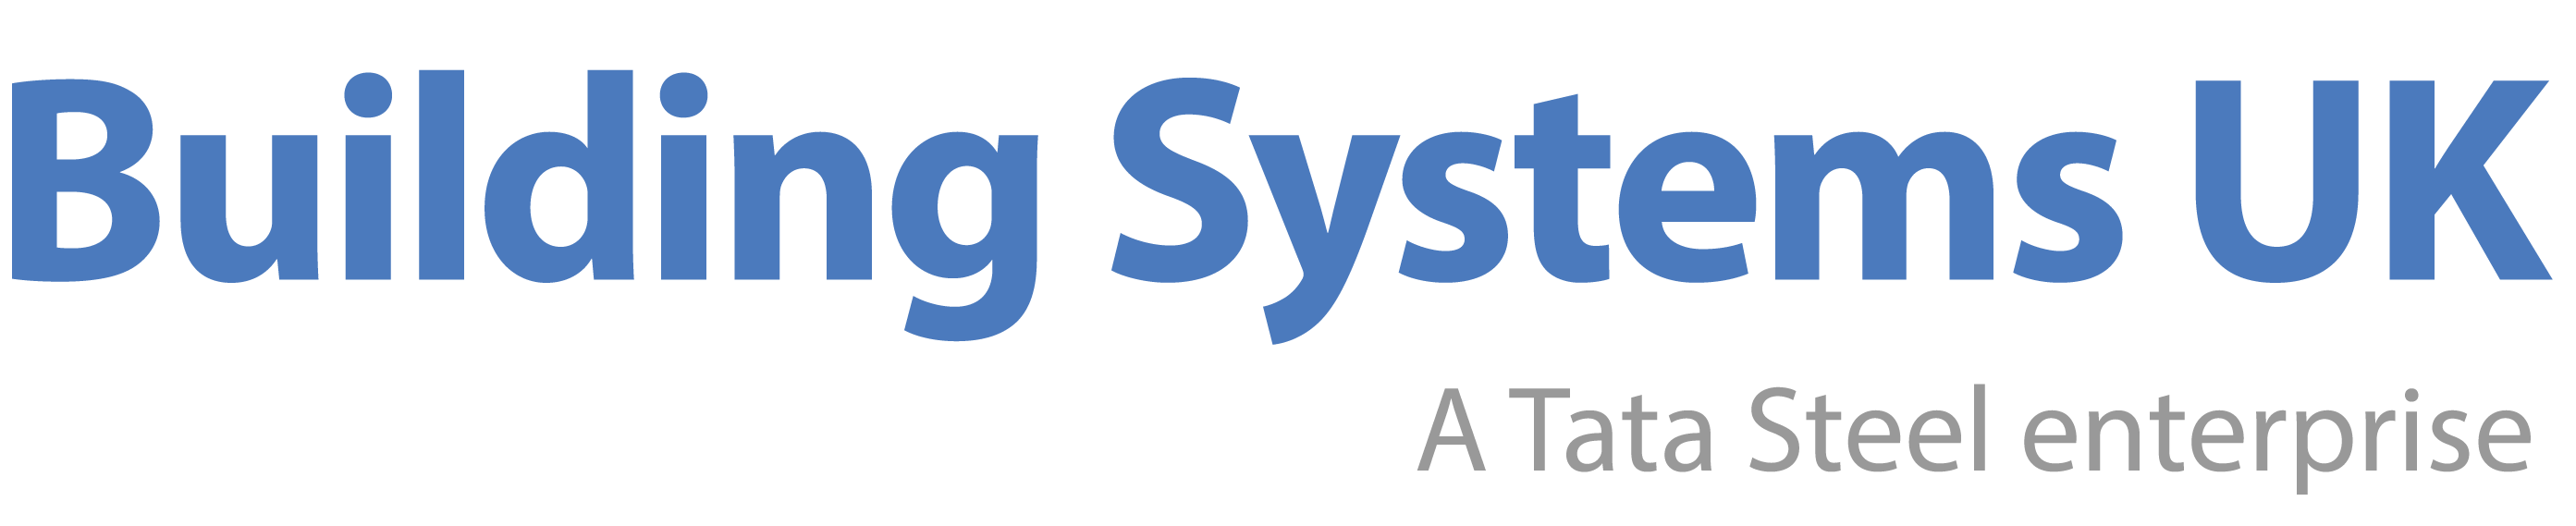 Building Systems UK Logo (A Enterprise of Tata Steel)